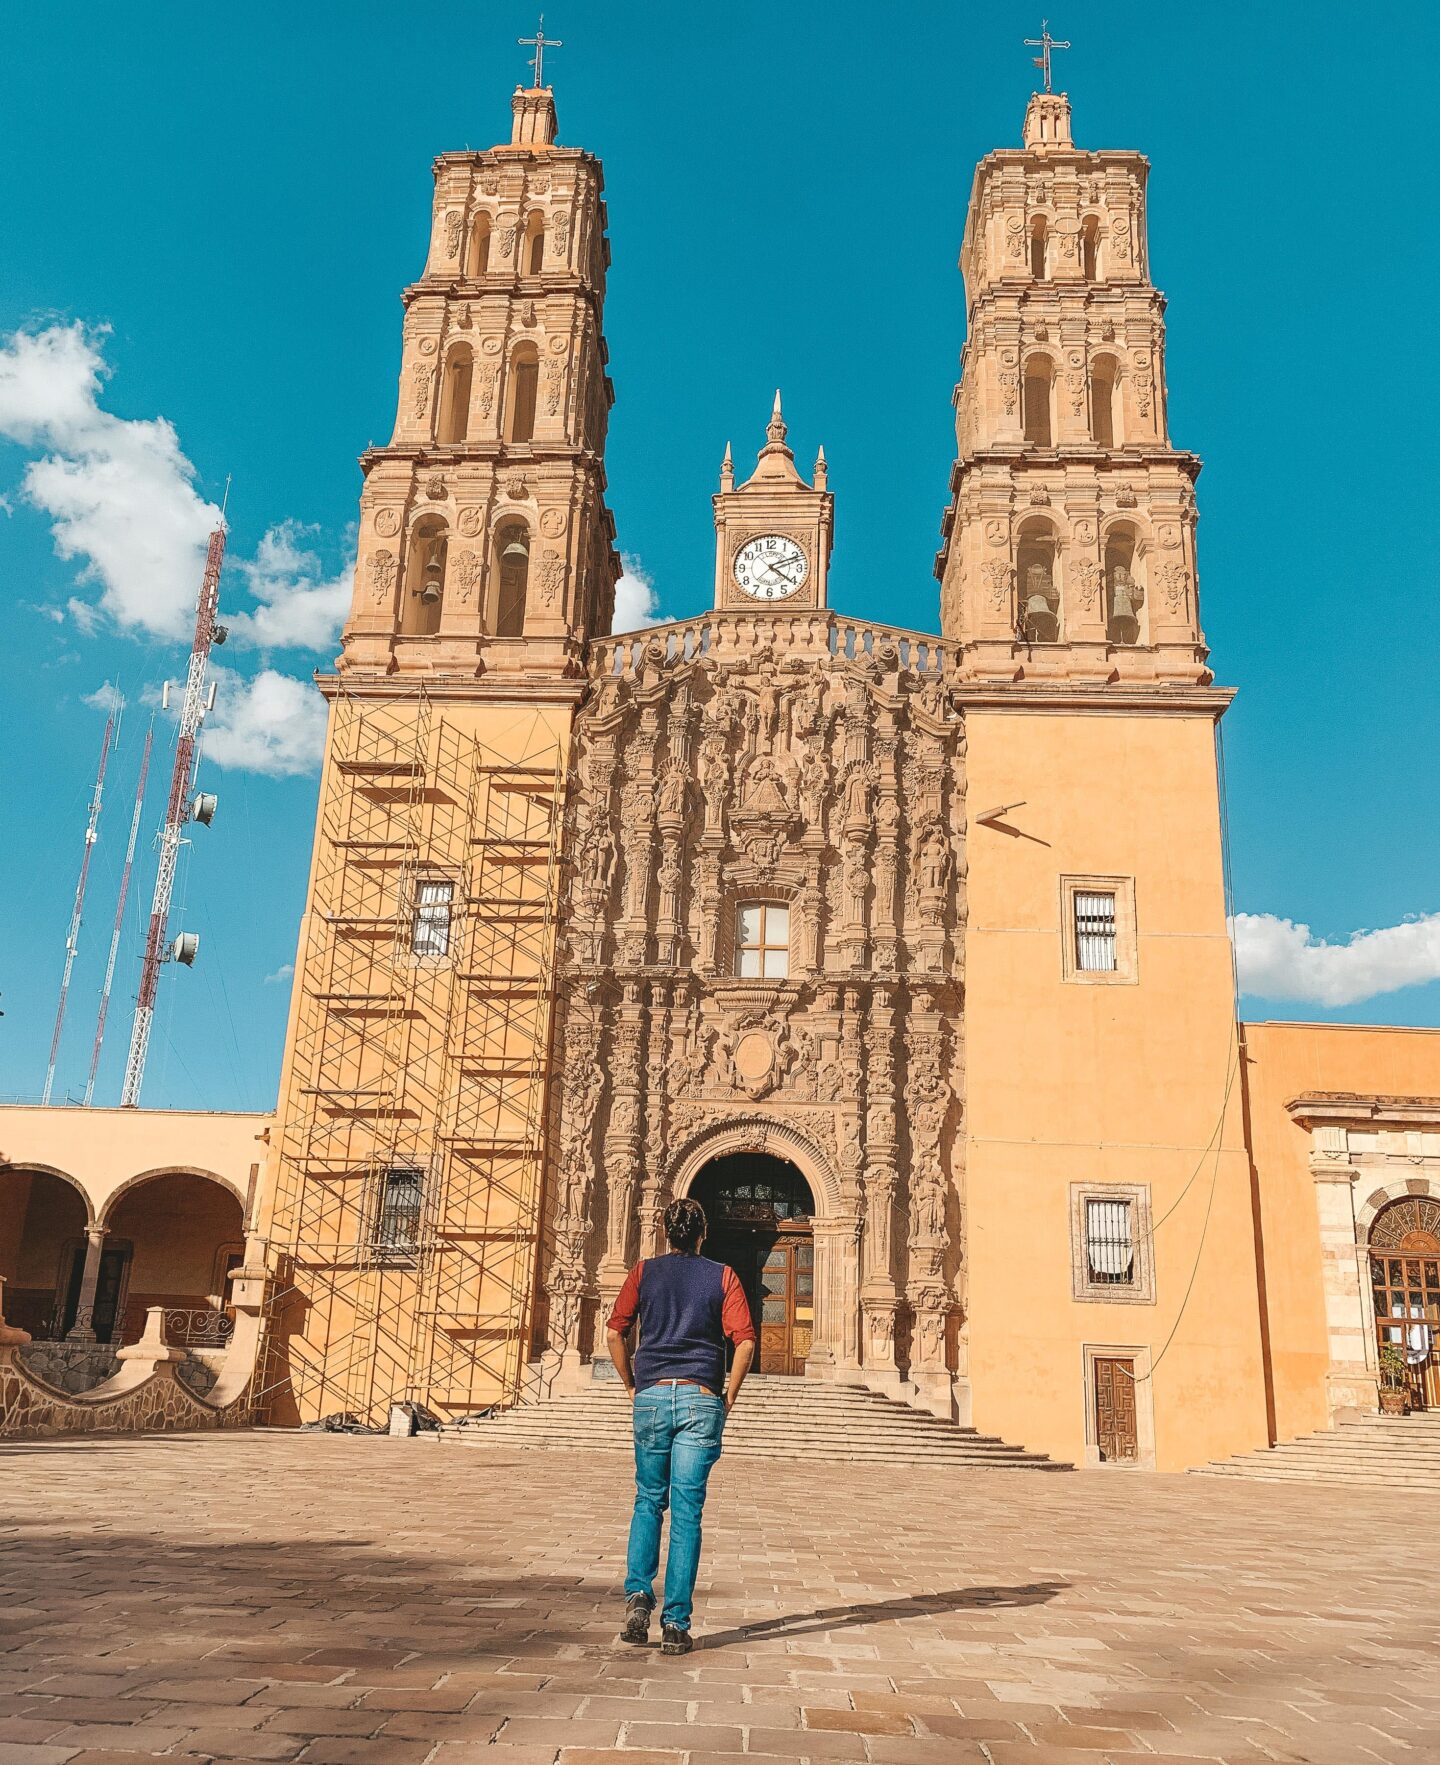 Pueblos Magicos in the State of Guanajuato